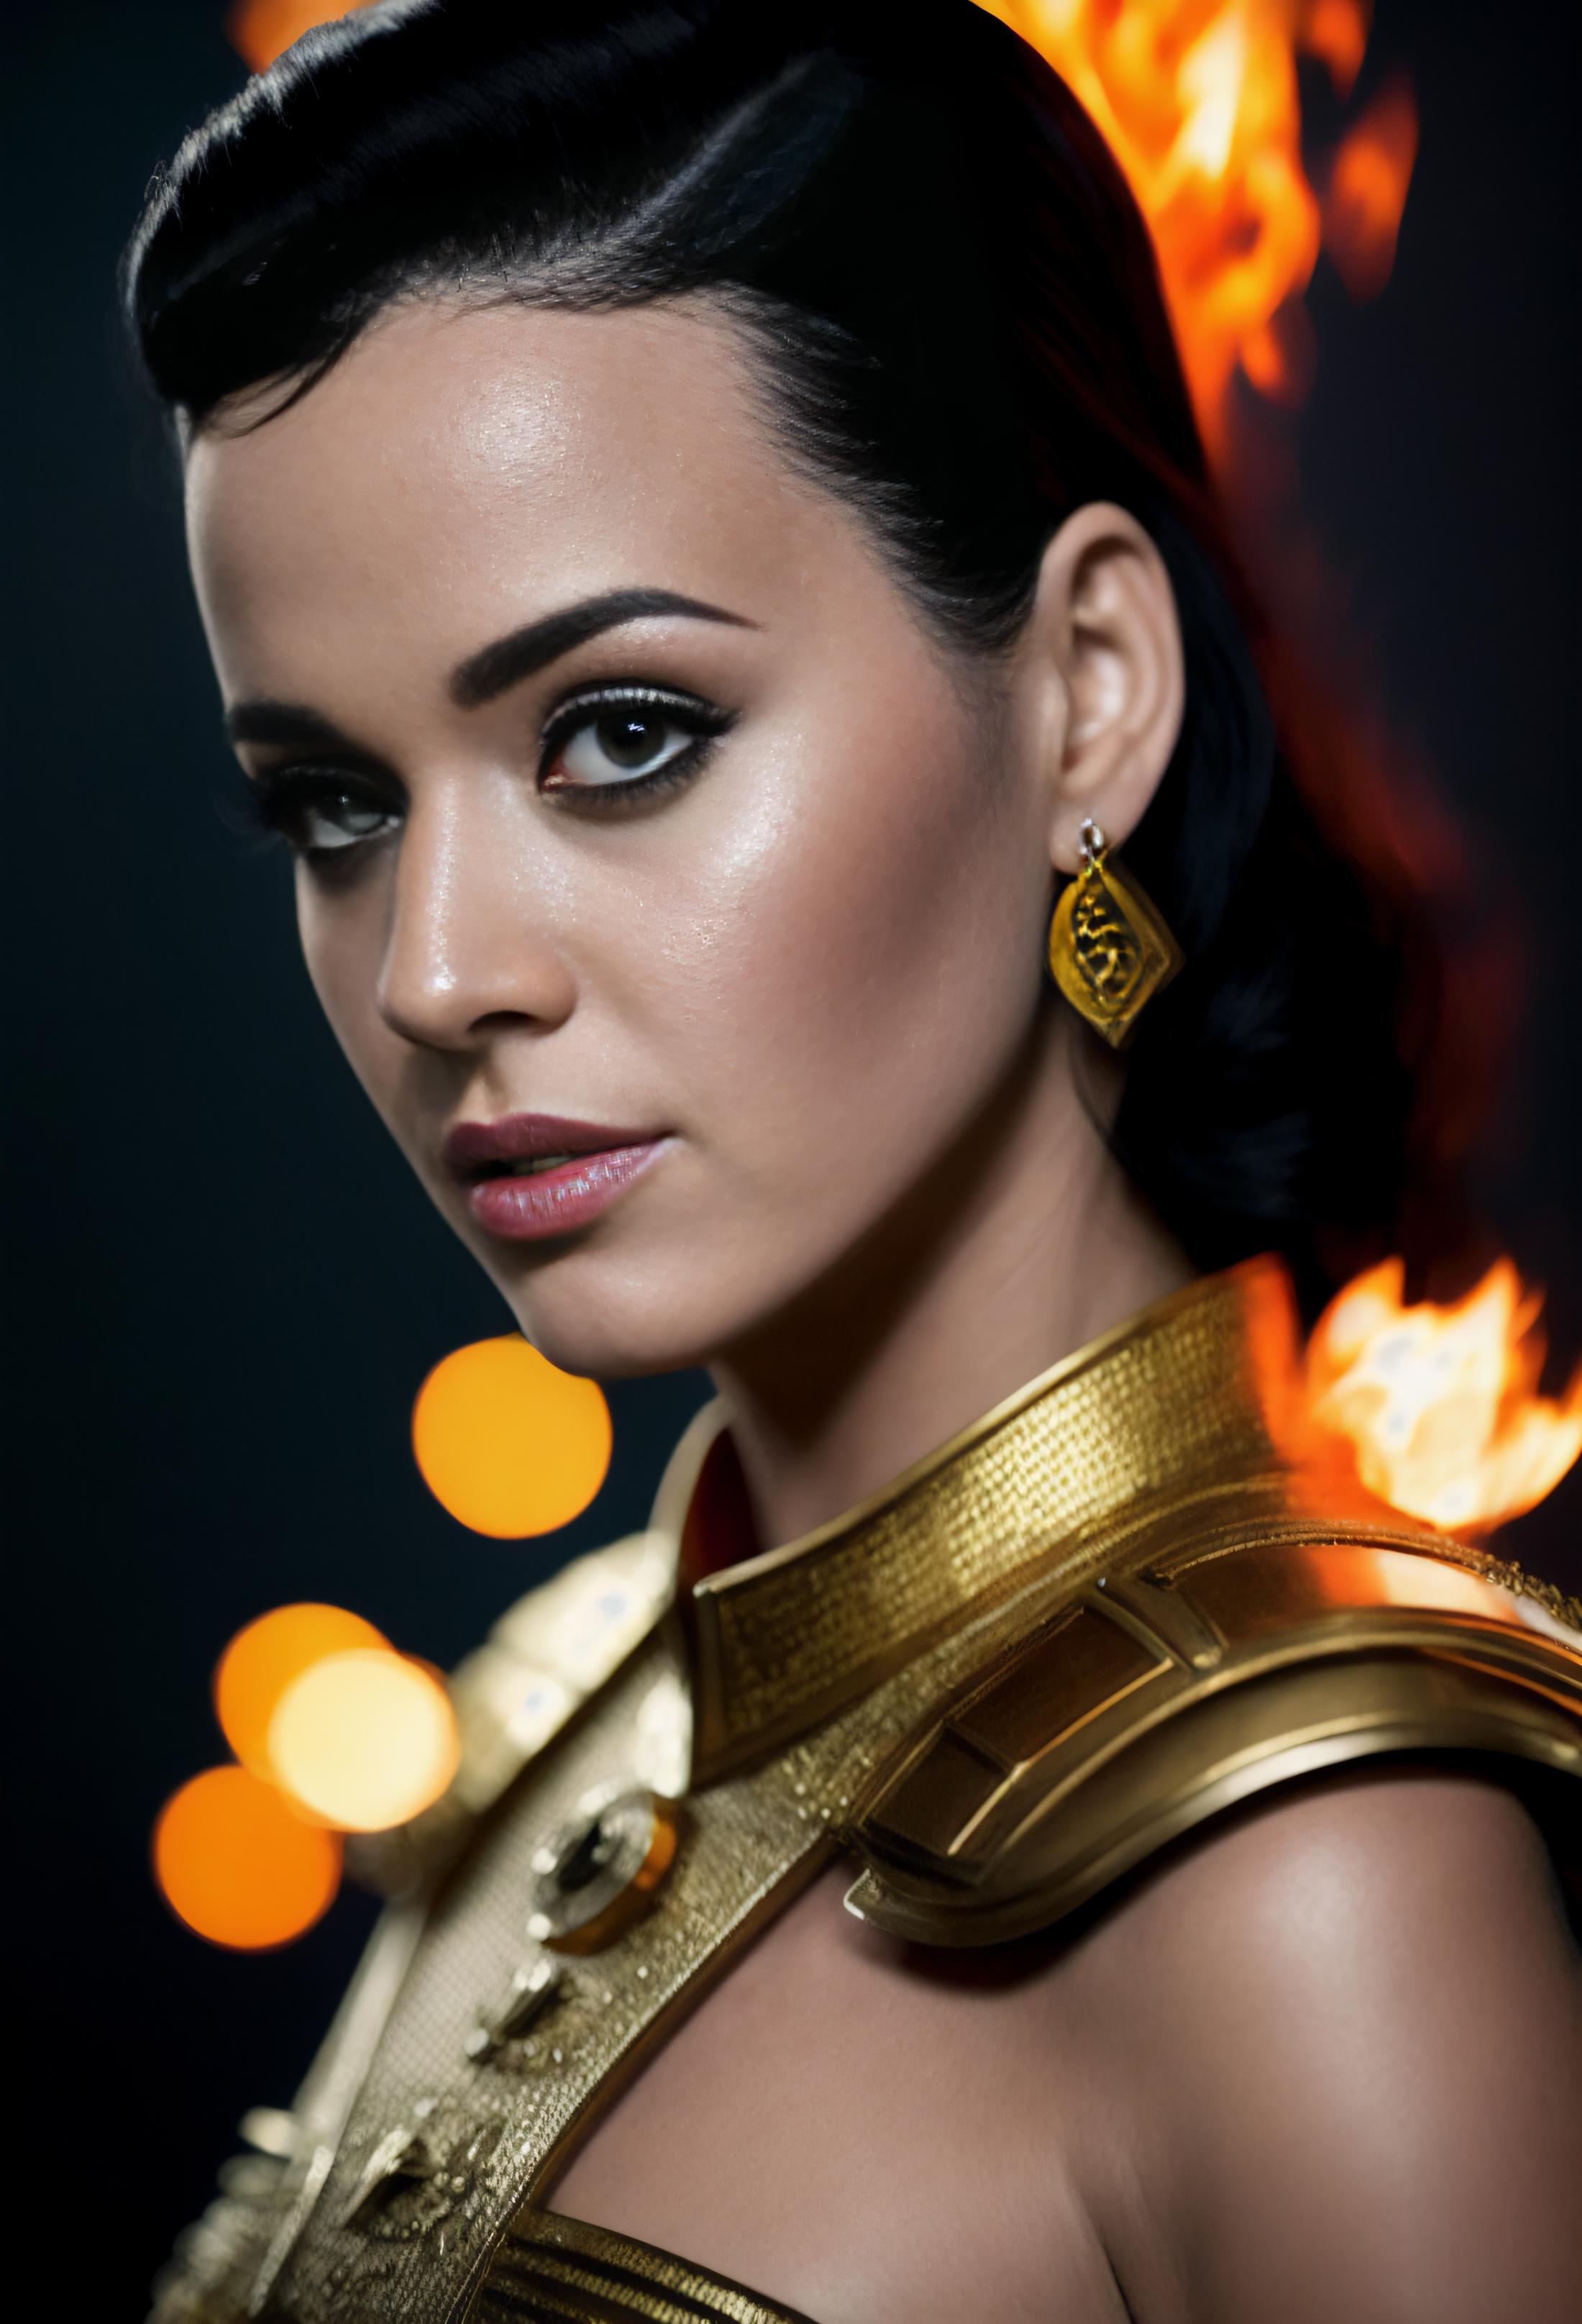 Katy Perry  image by frankyfrank2k